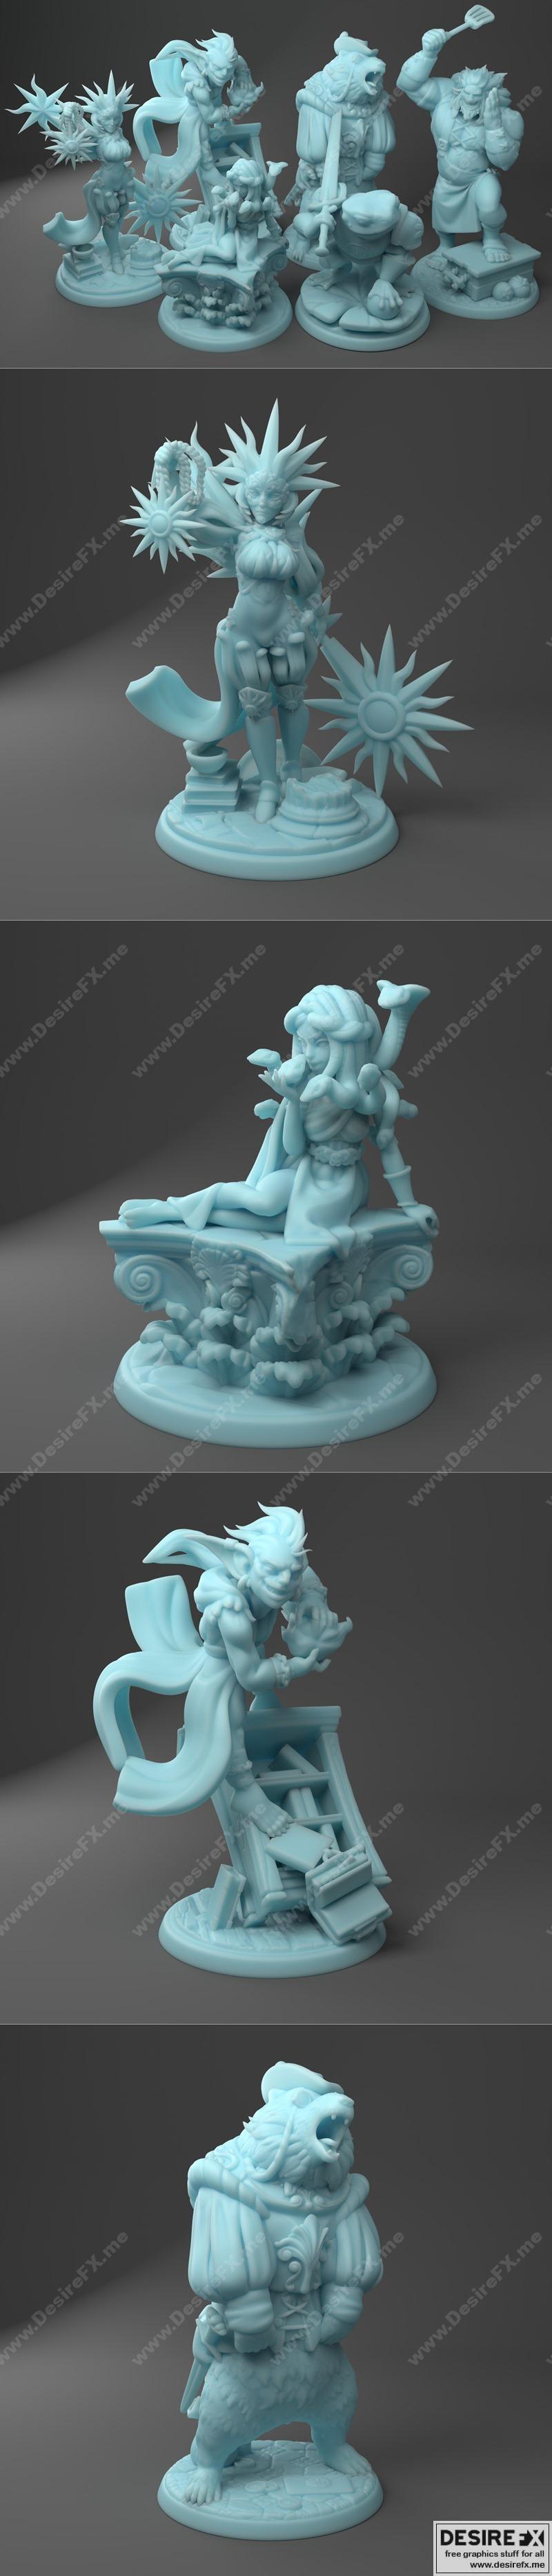 Desire FX 3d models | Twin Goddess Miniatures – April 2021 – 3D Print ...